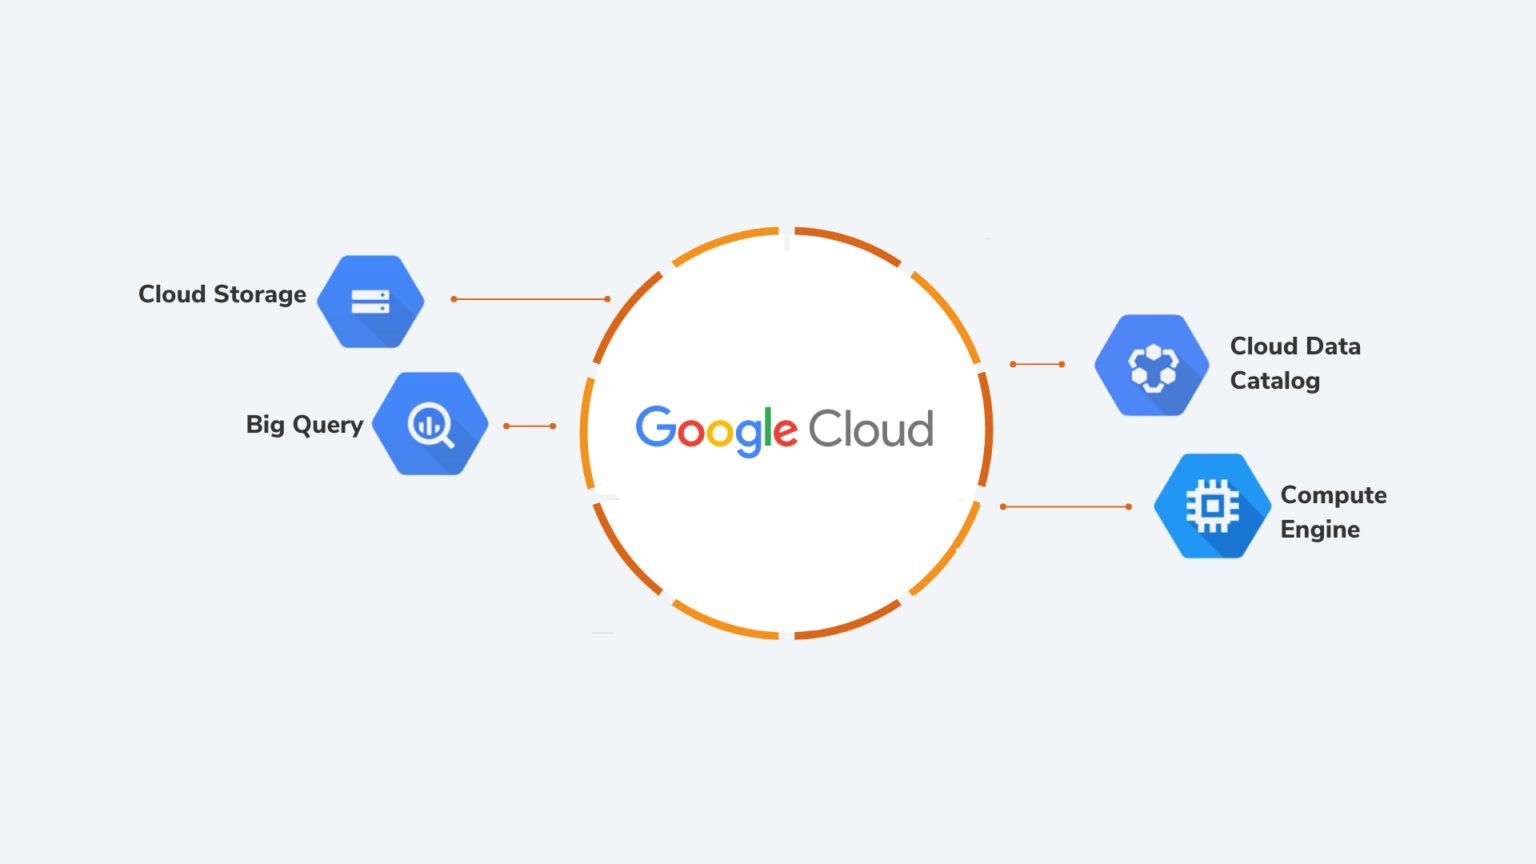 google cloud case study